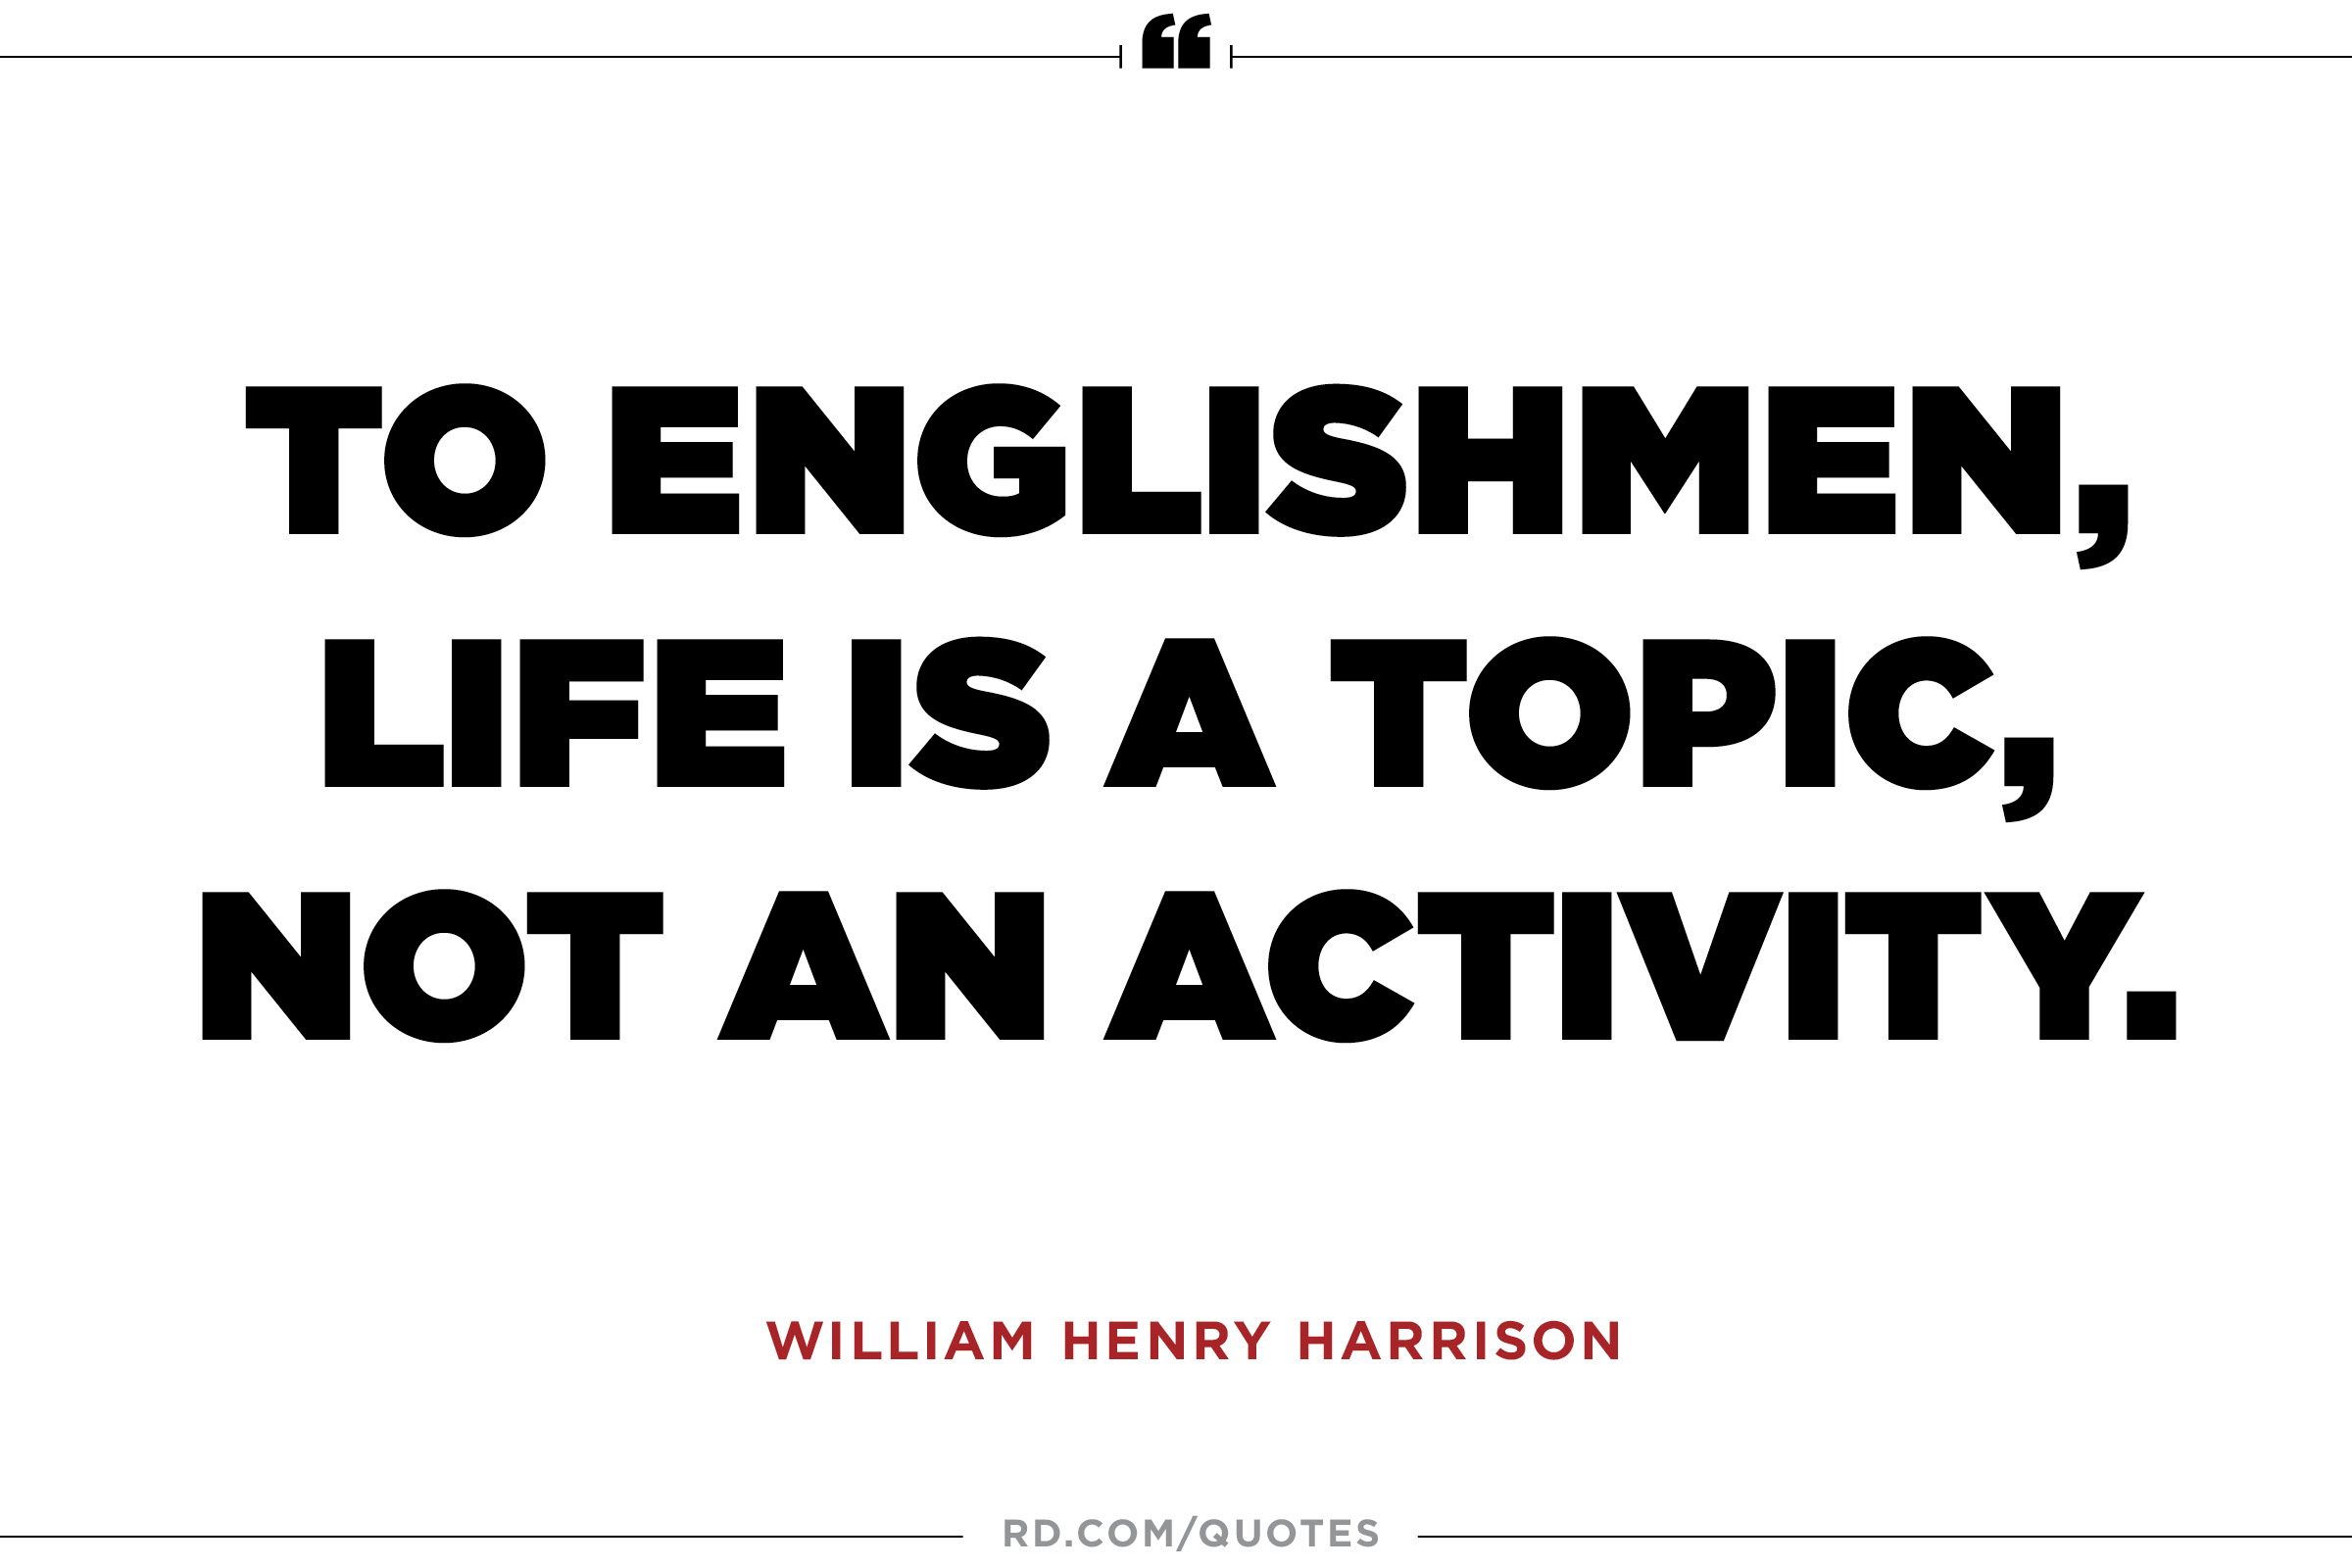 William Henry Harrison on the English